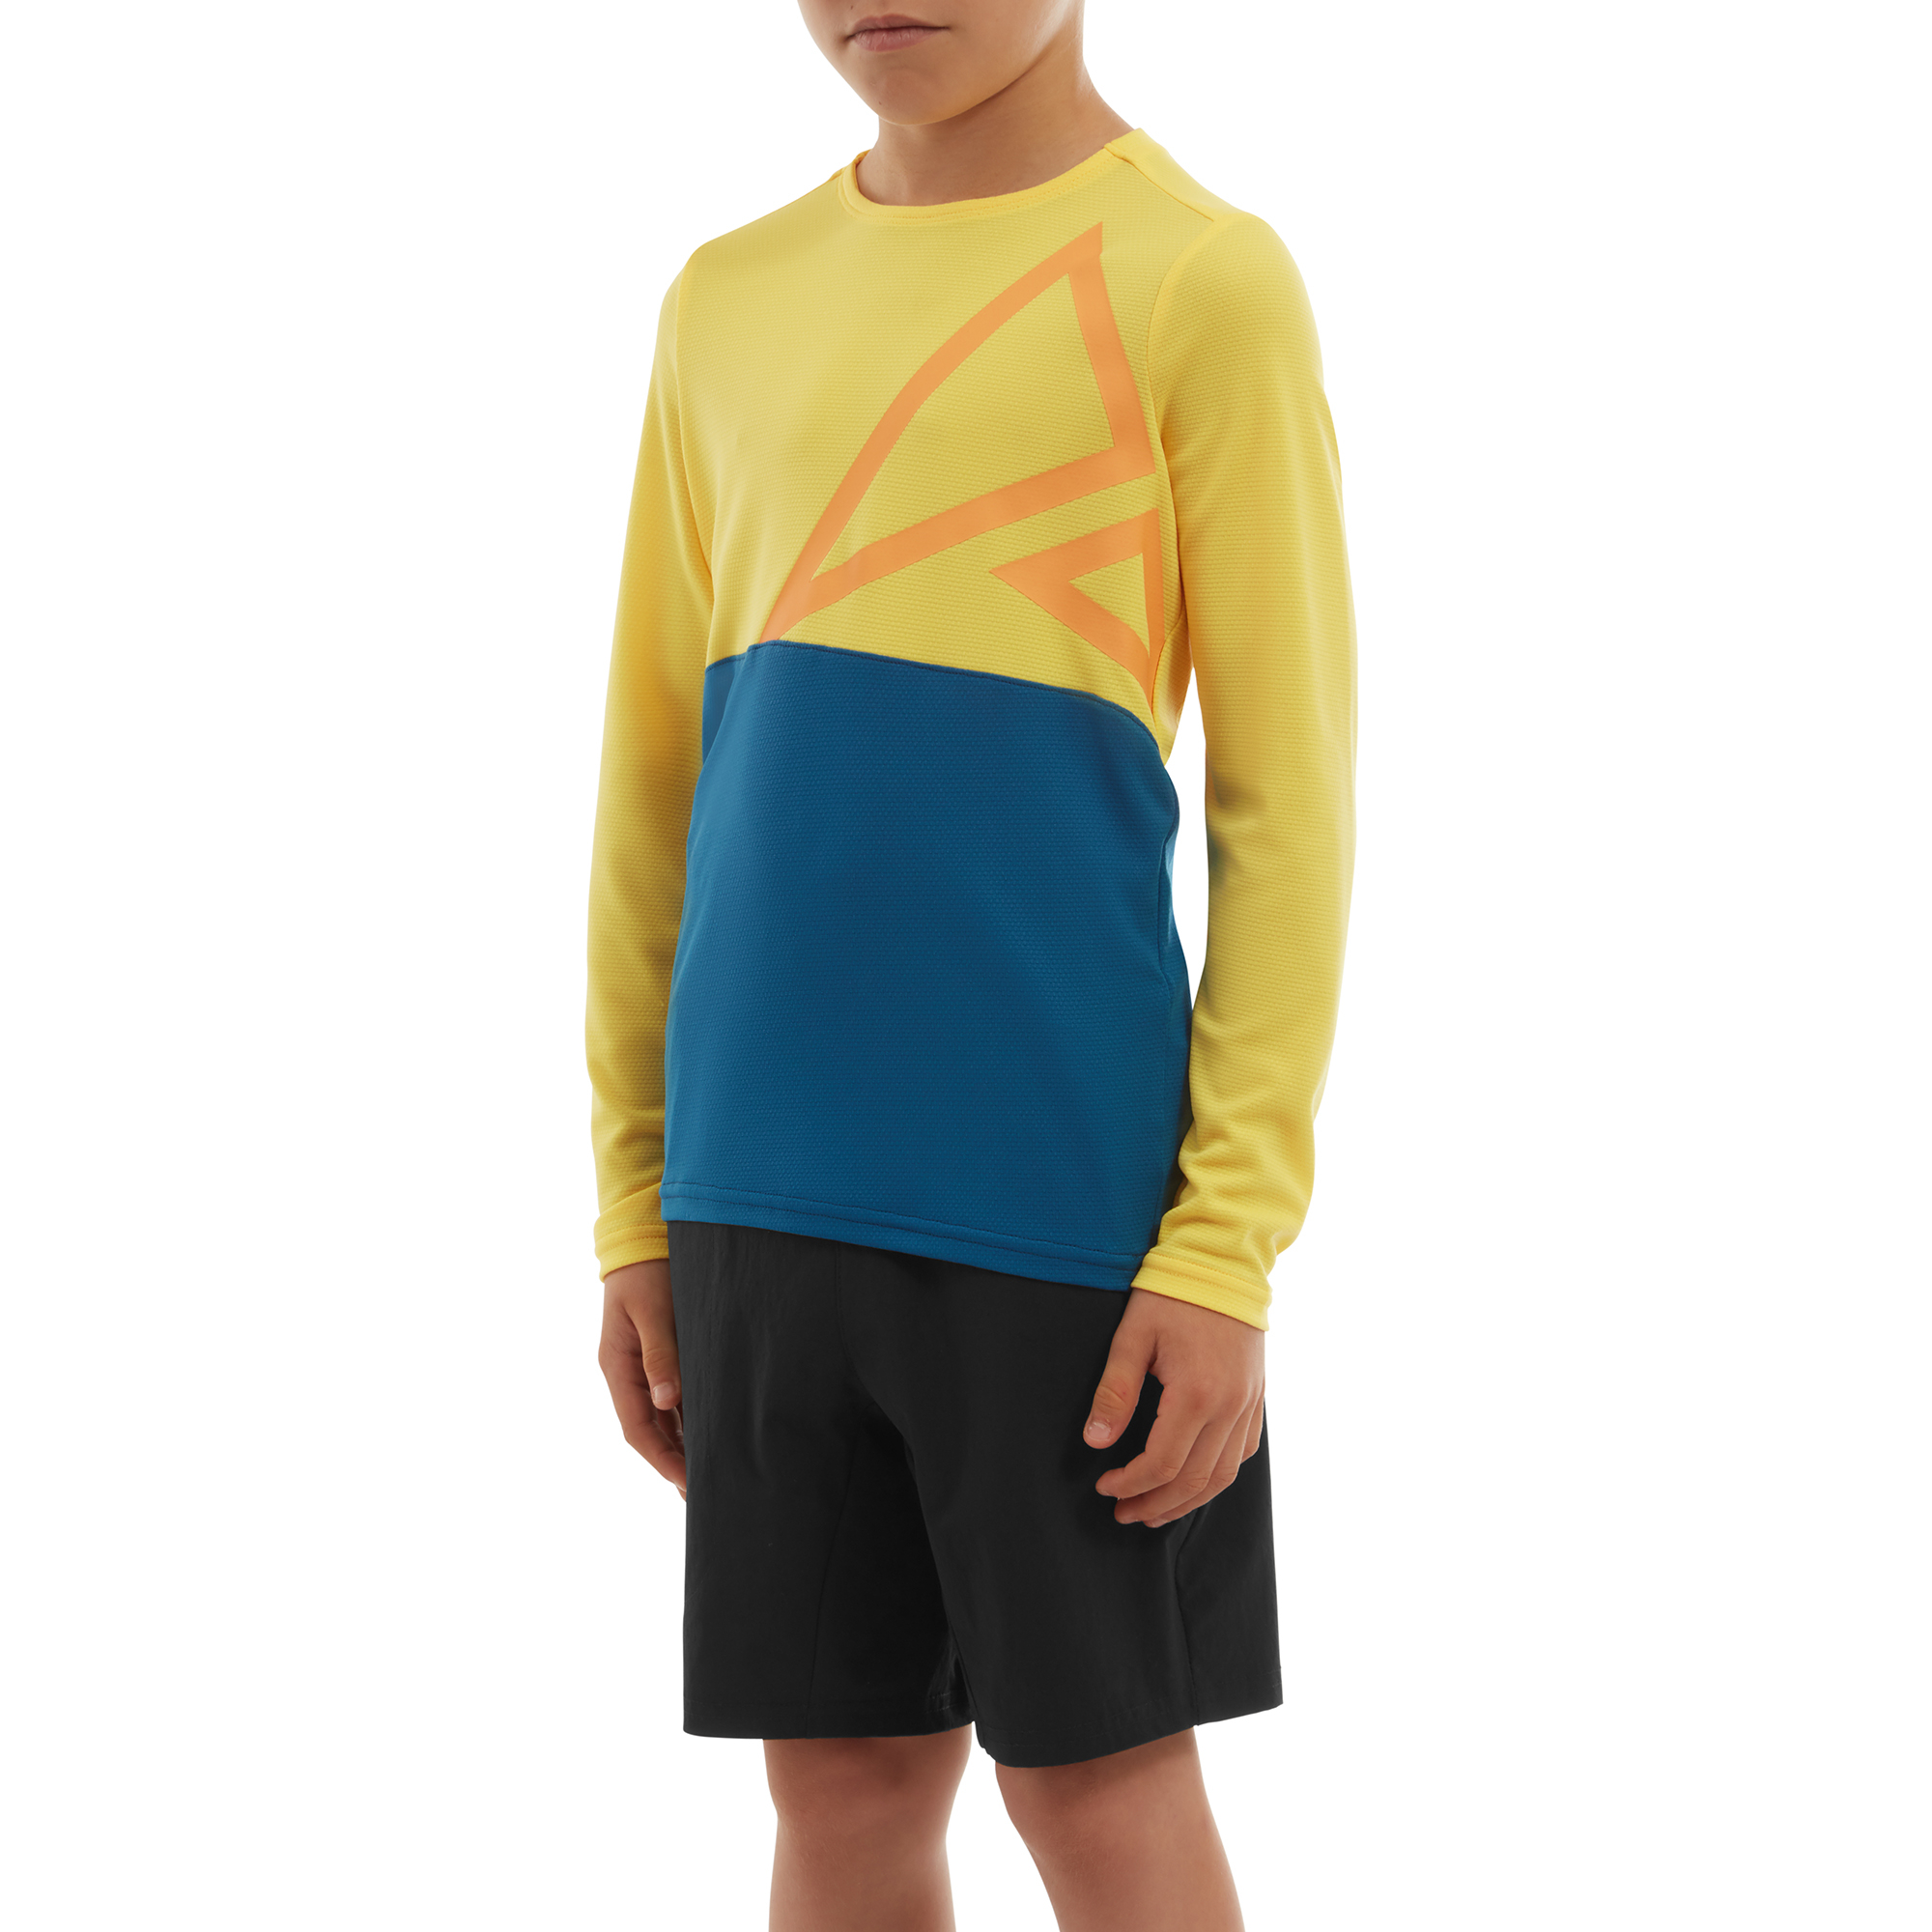 Altura  Spark Lightweight Kids Long Sleeve Jersey 11 to 12 Years YELLOW/BLUE